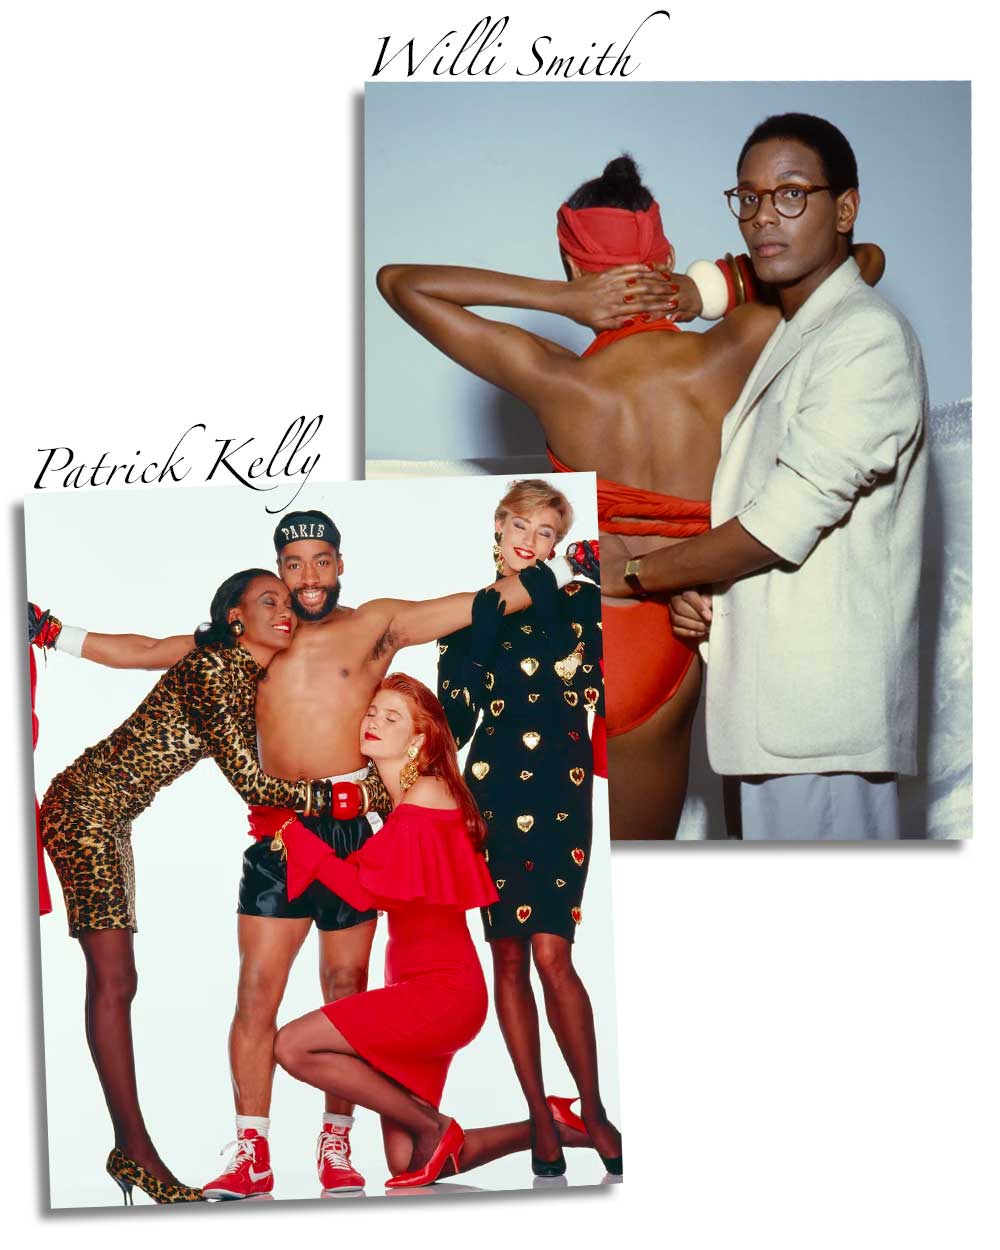 Black 80s Fashion Designers Patrick Kelly and Willi Smith